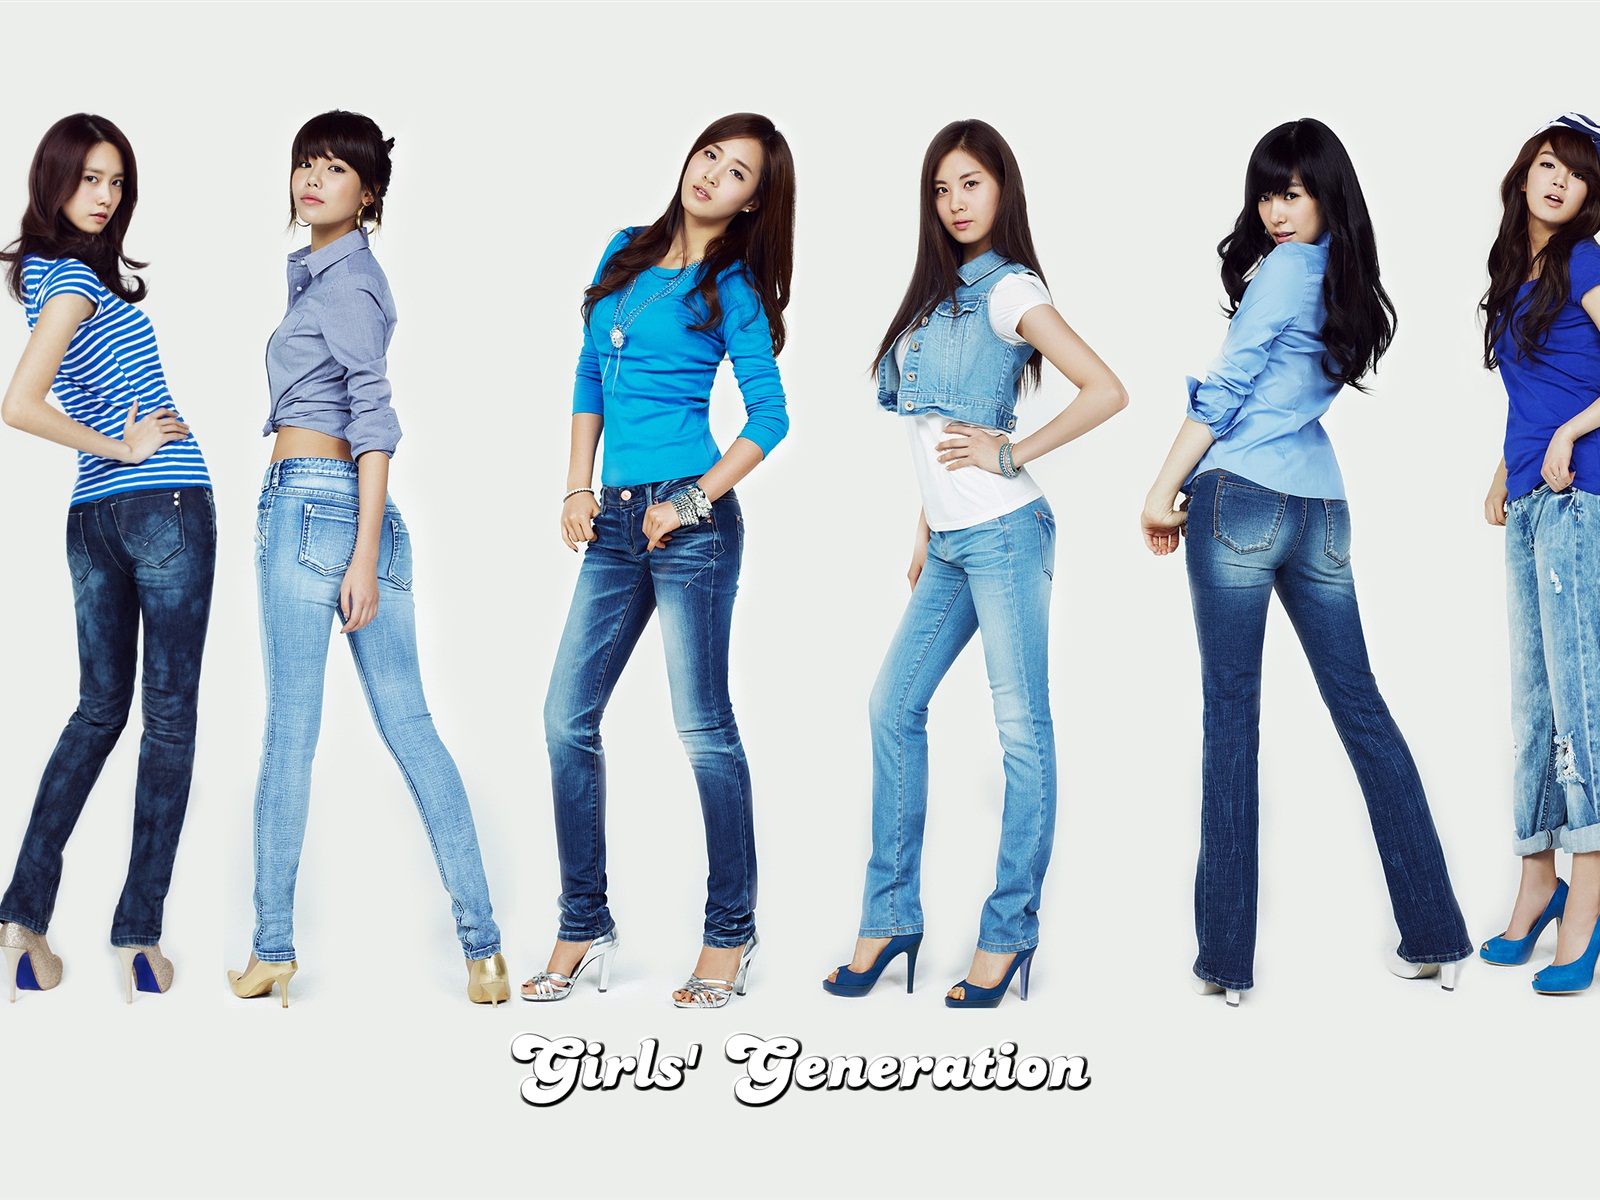 Girls Generation neuesten HD Wallpapers Collection #22 - 1600x1200